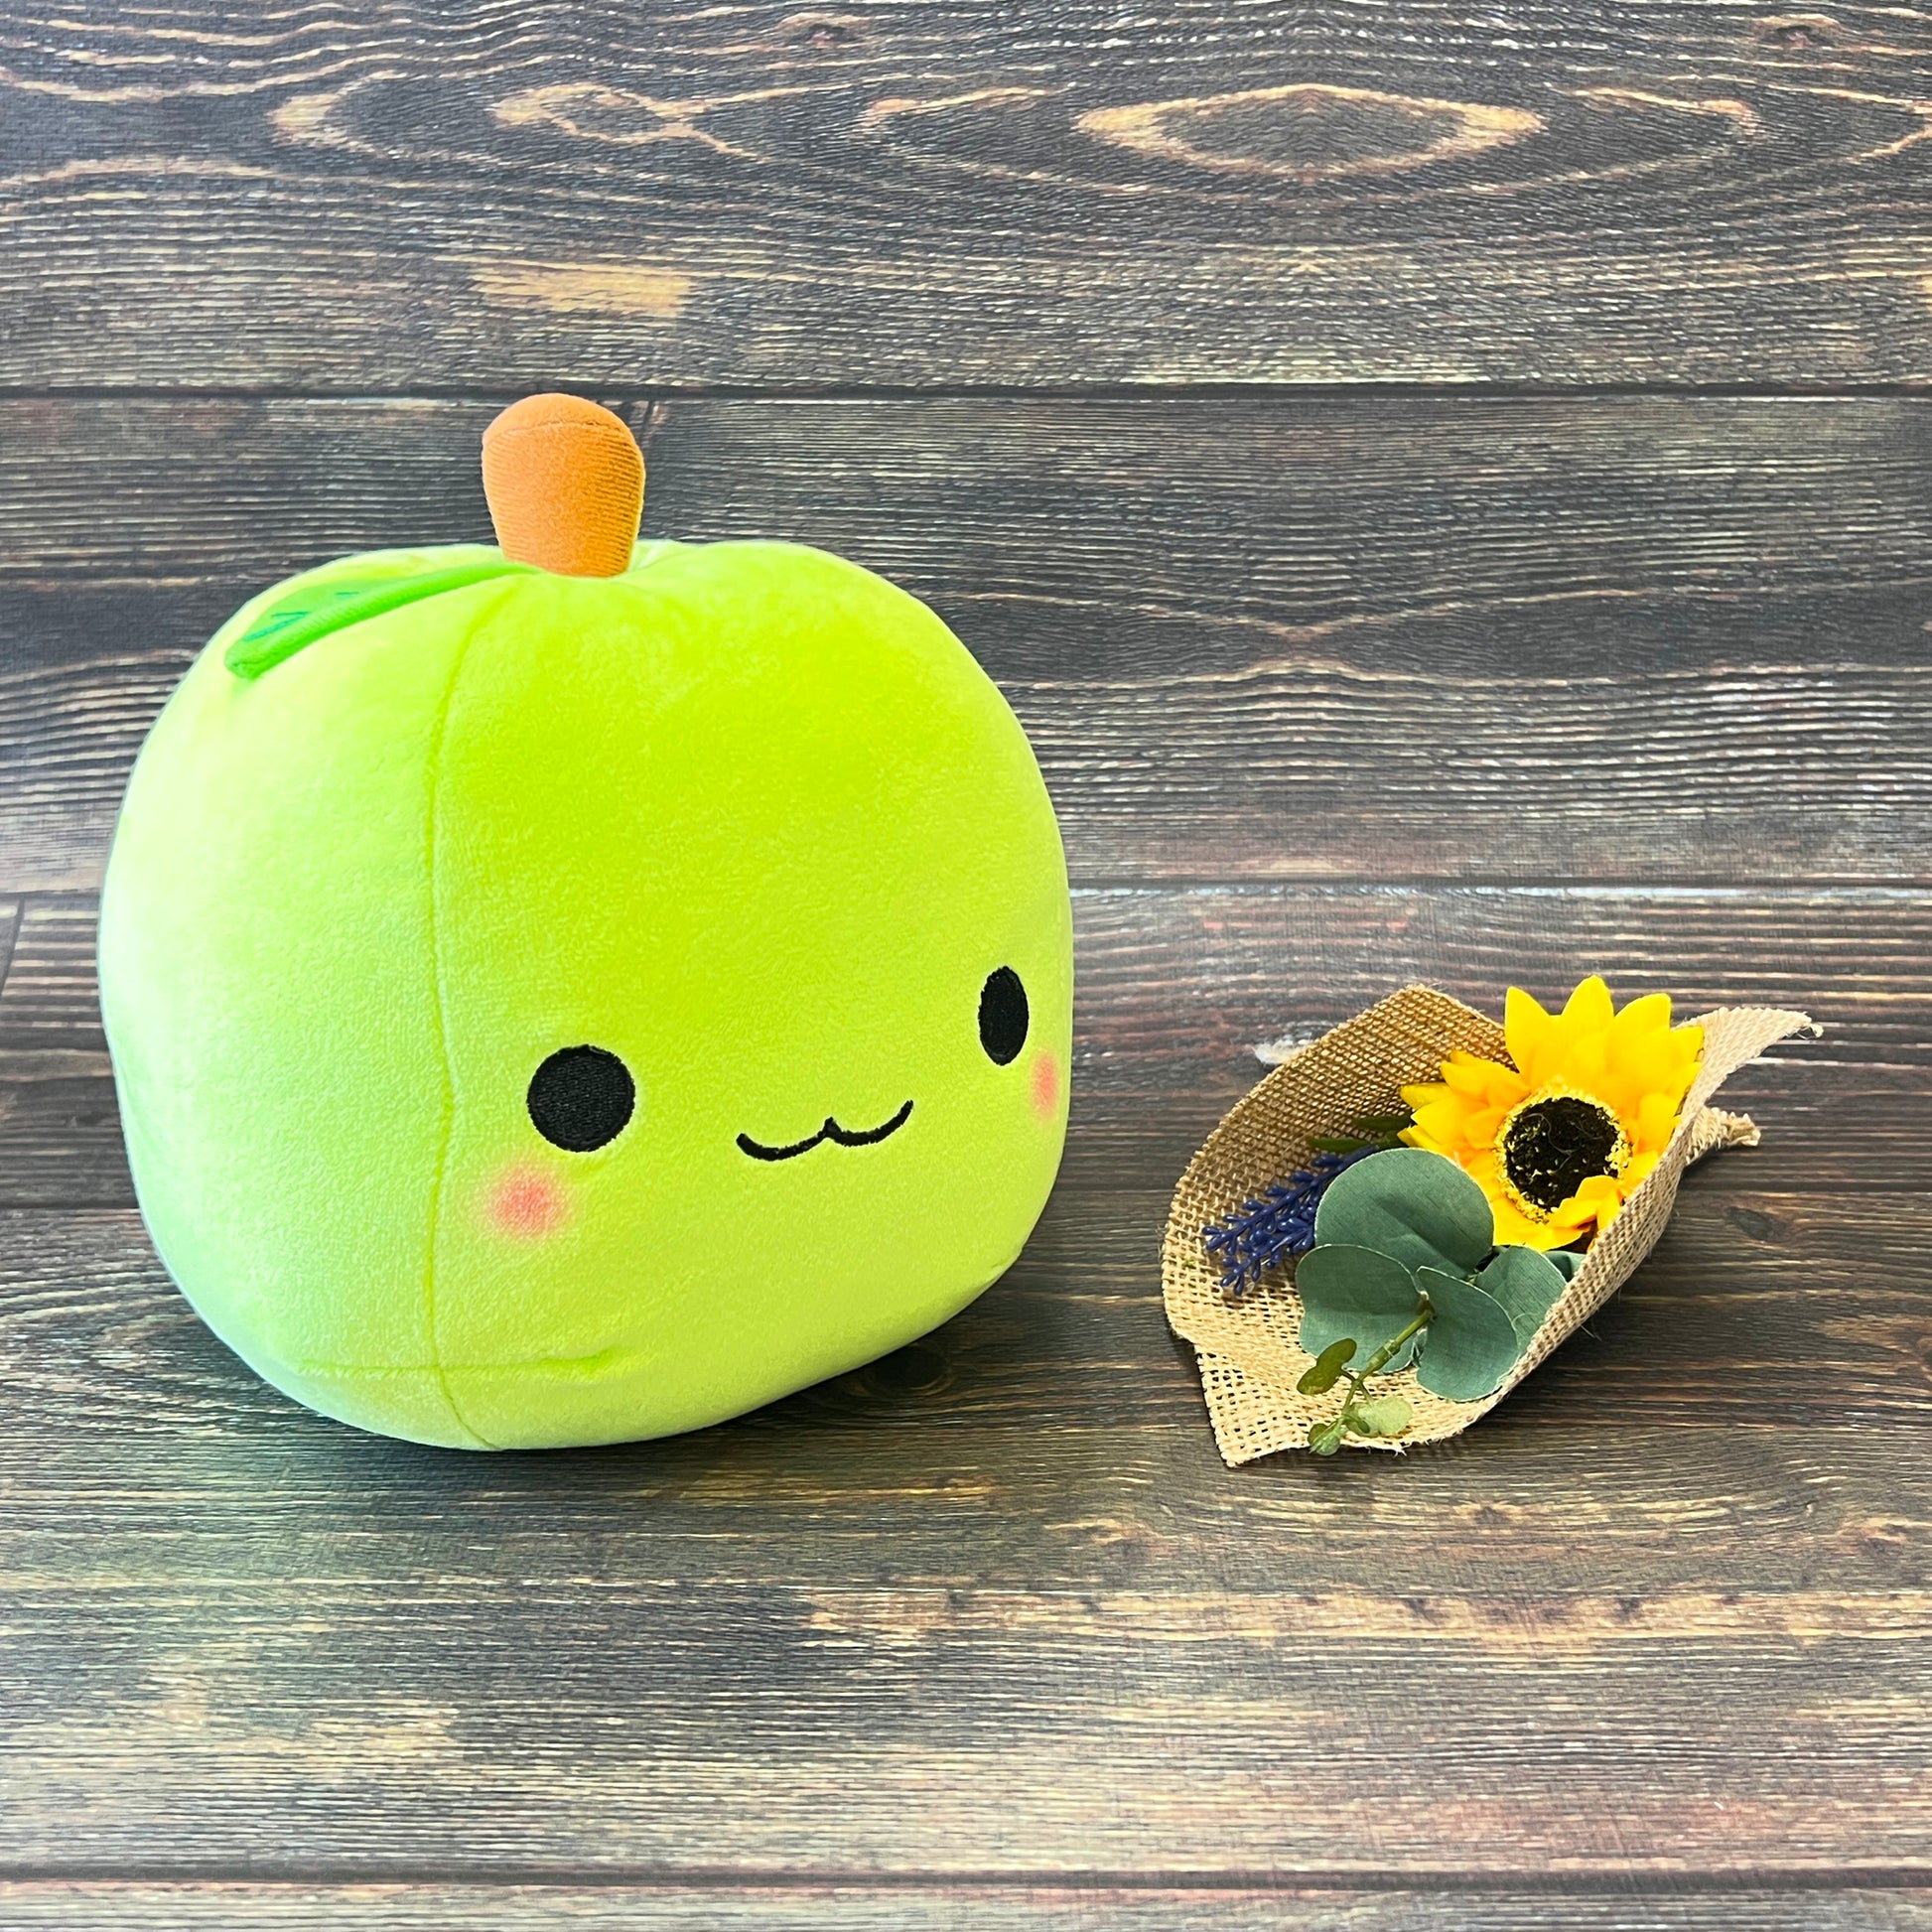 Impression of Apple Fruit Stuffed Toy Ringochan Green